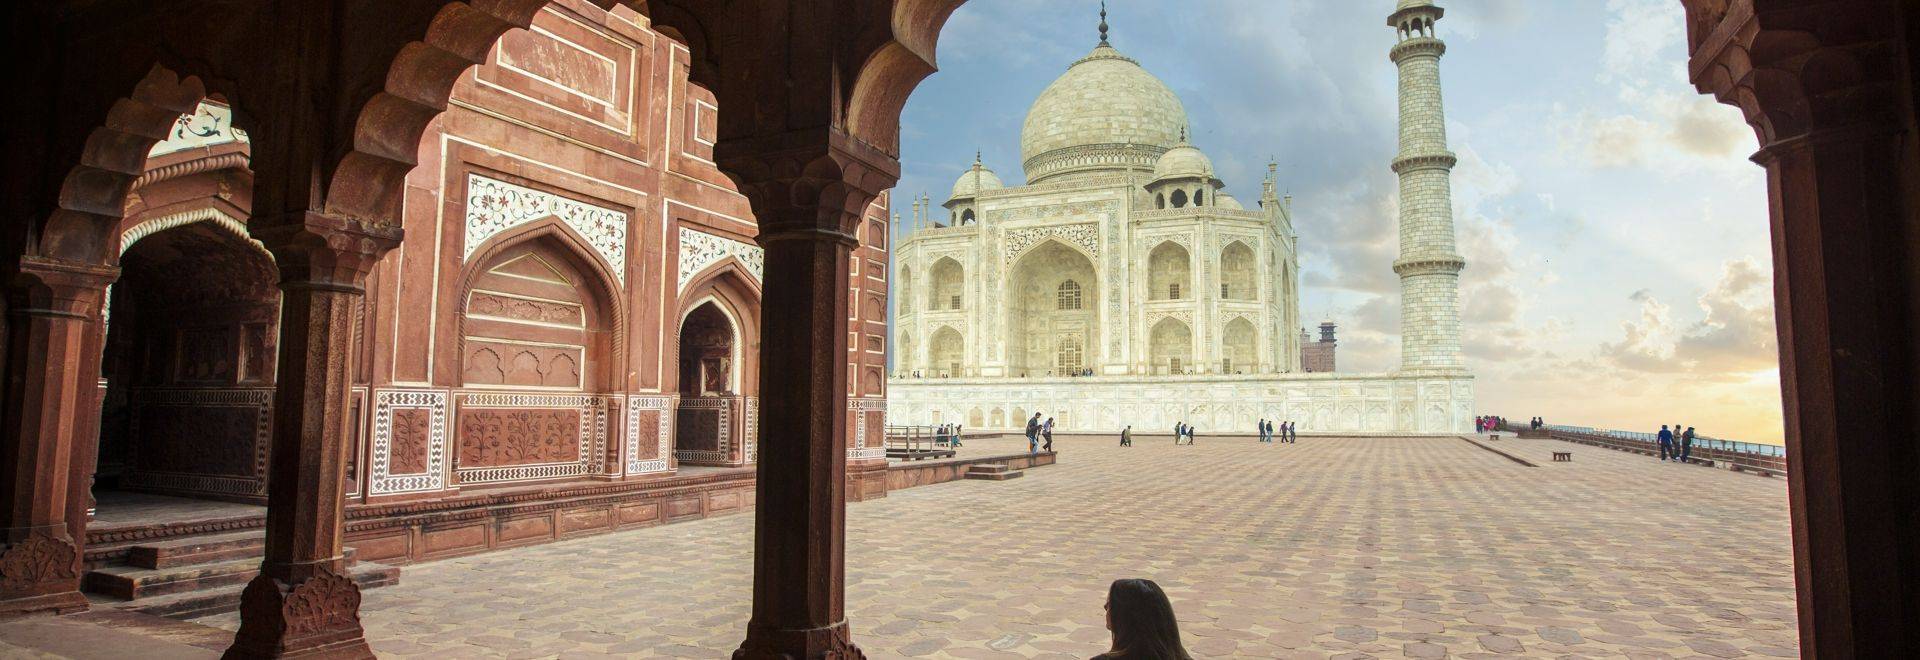 India Agra Taj Mahal Arches Traveller - M18161 Lg RGB.jpg